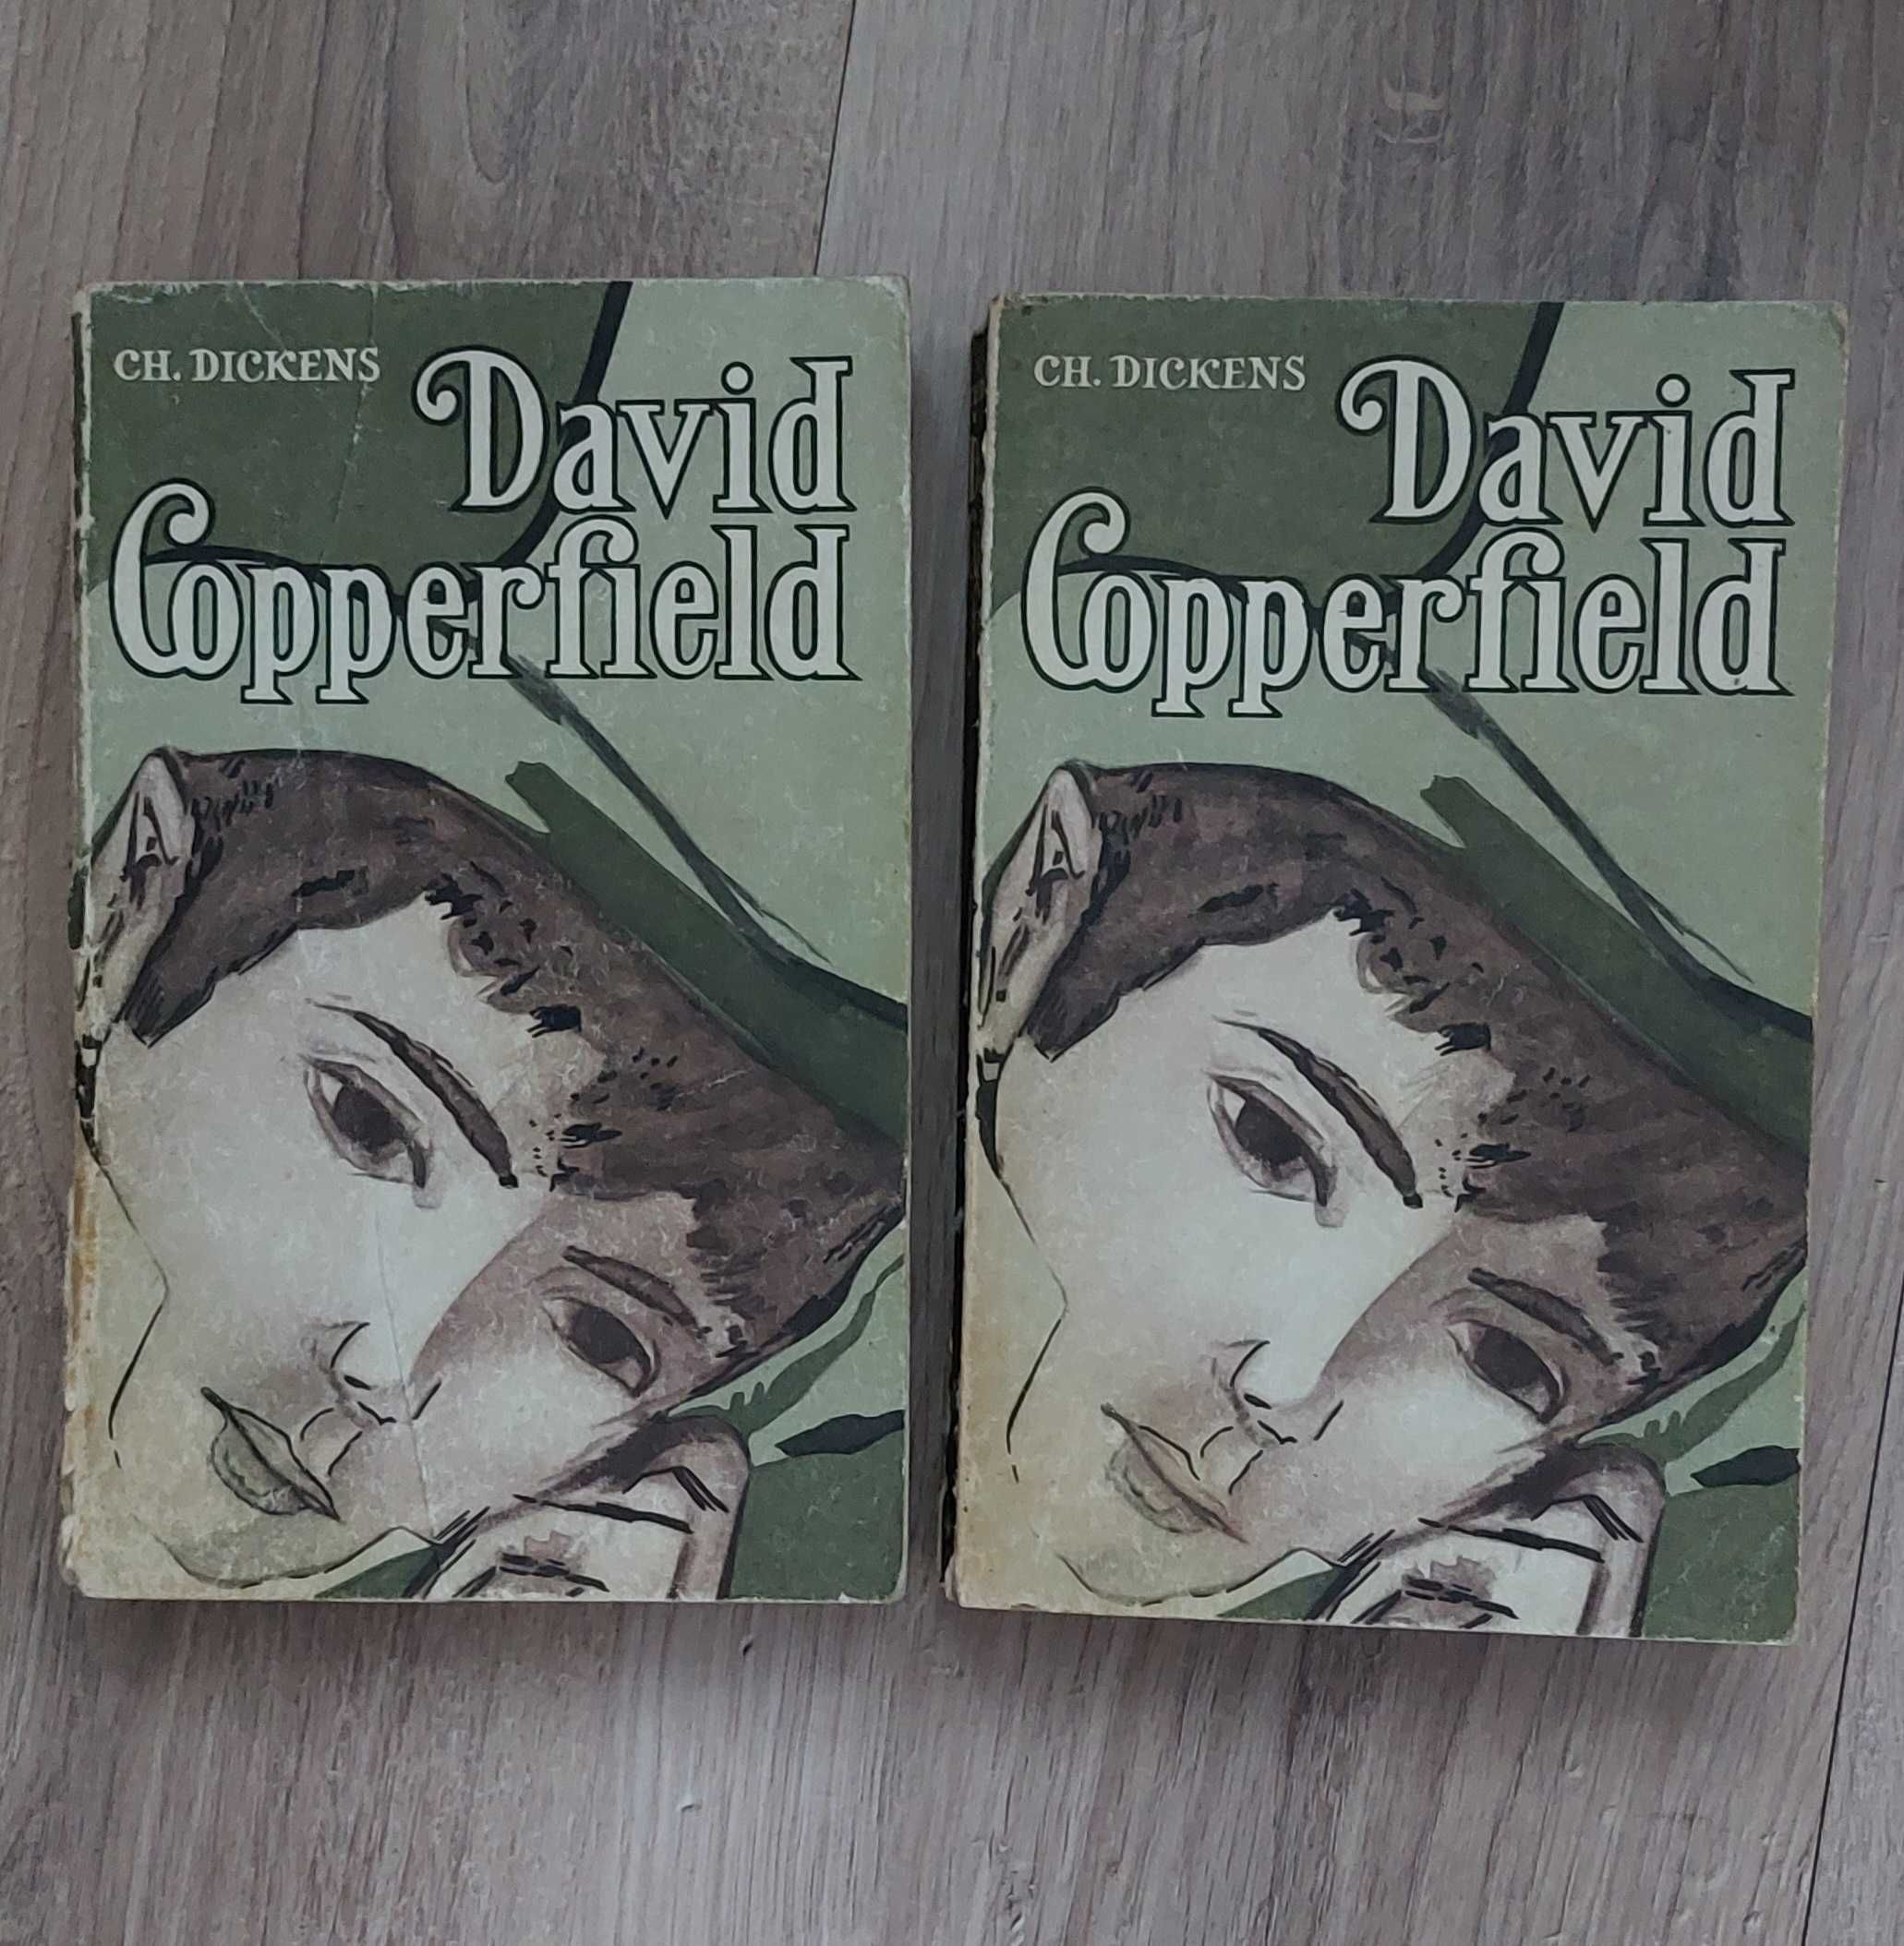 Roman David Copperfield 2 vol.